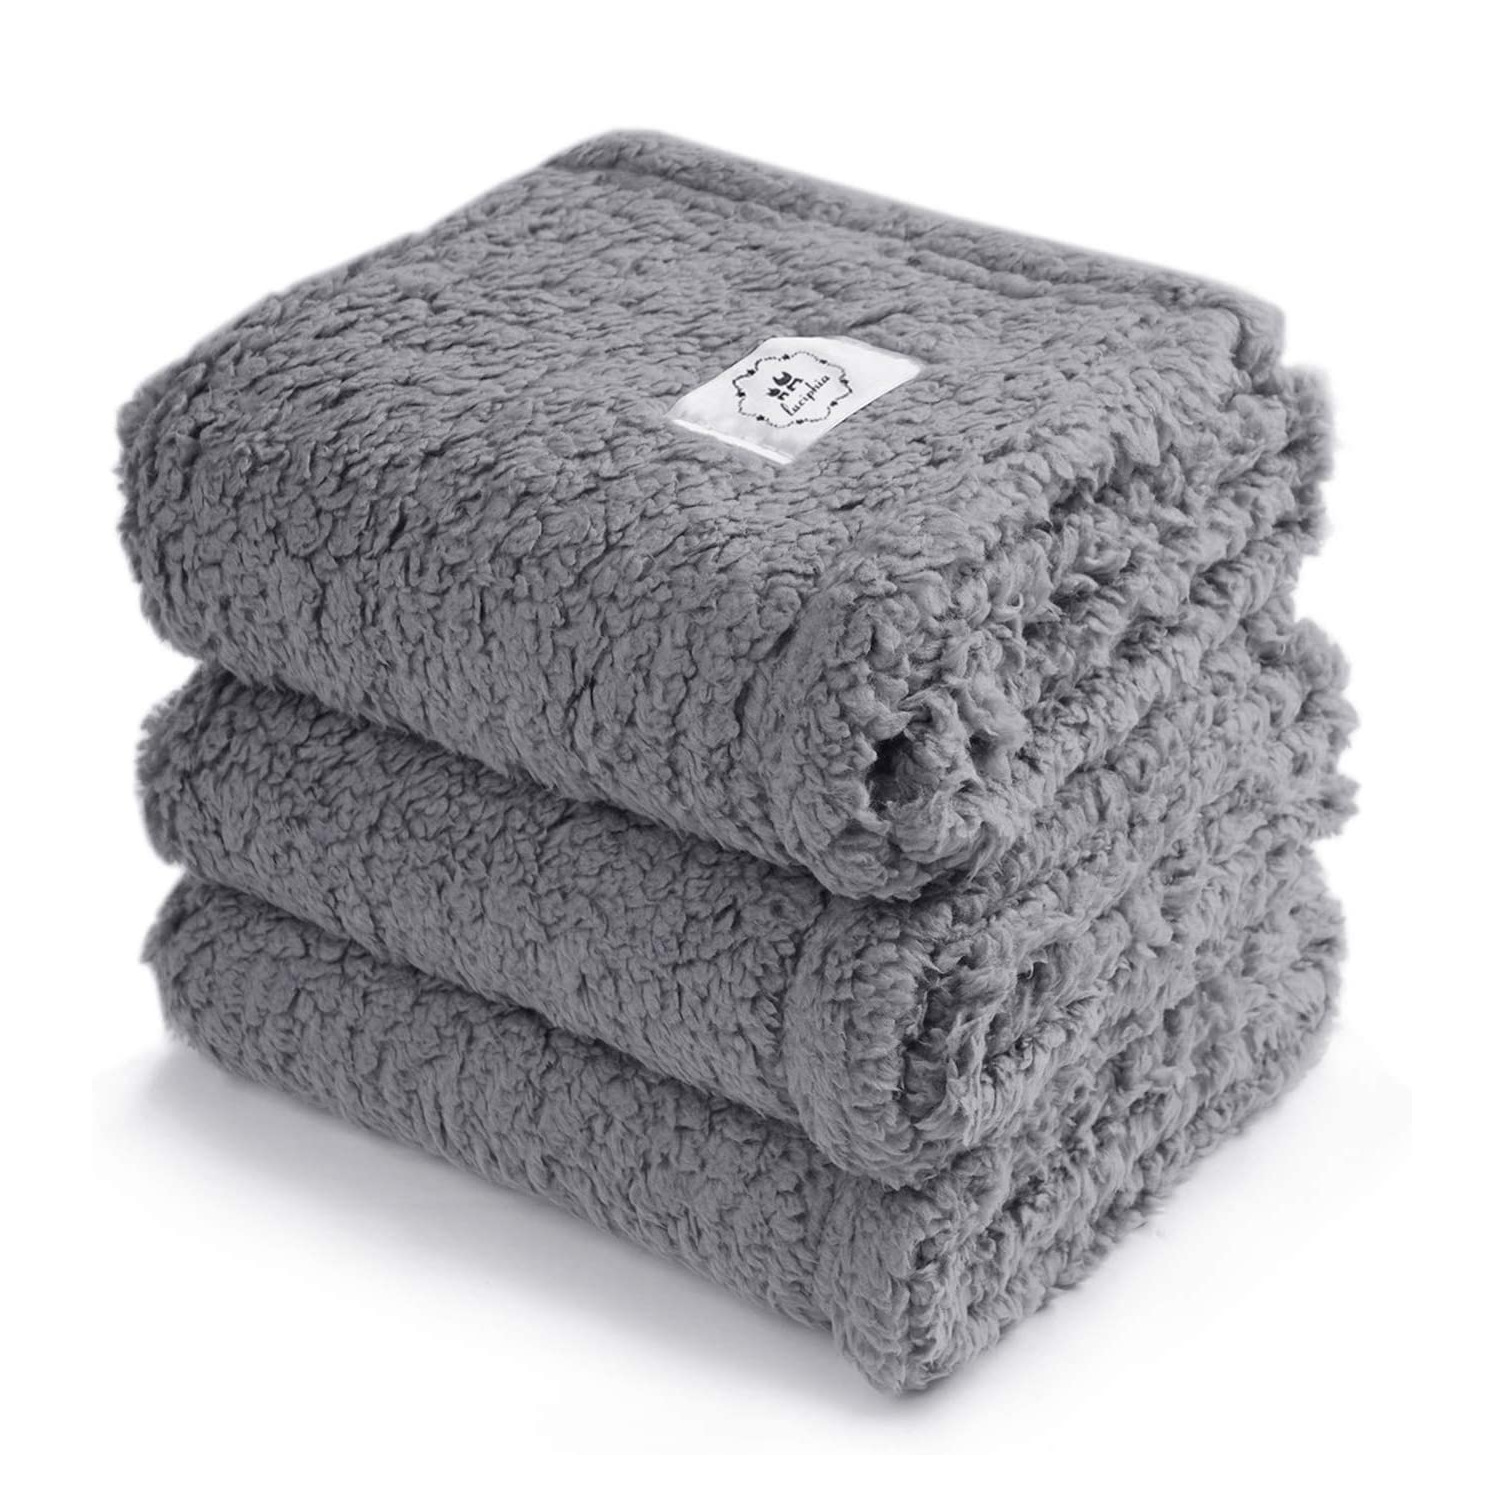 1 Pack of 3 Premium Fluffy Fleece Pet Blankets